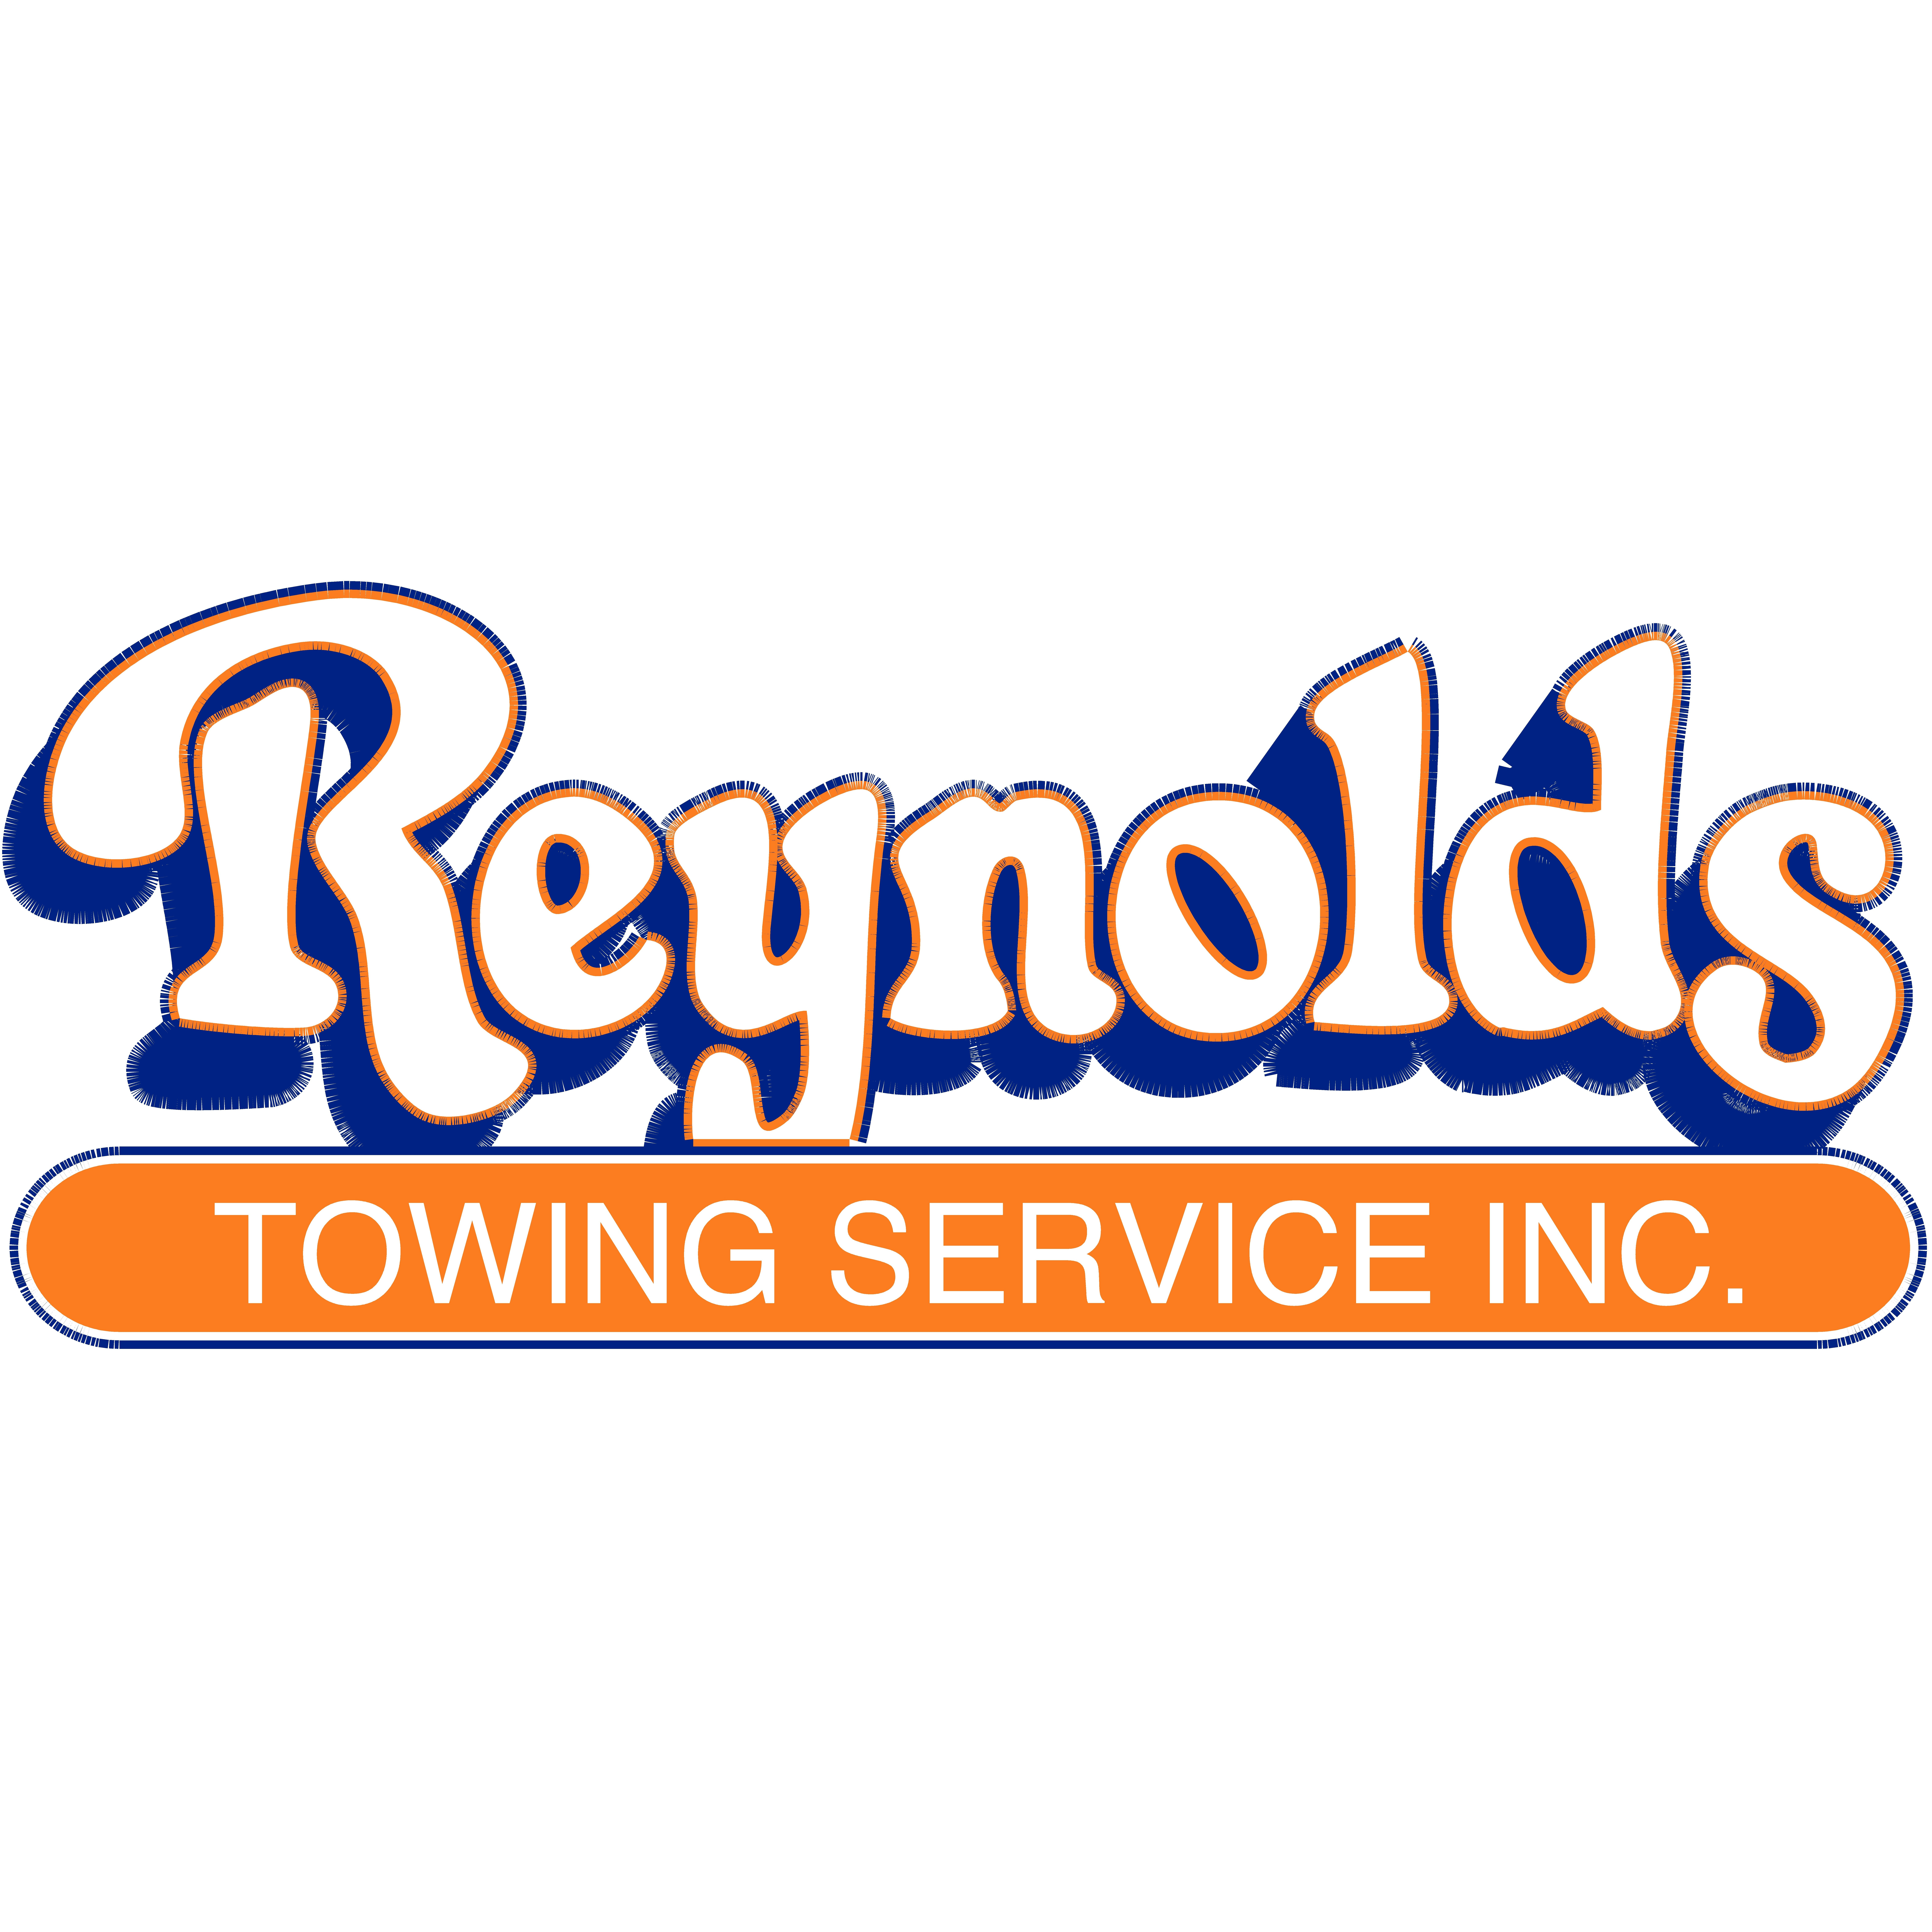 Reynolds Towing Service - Urbana, IL 61801 - (217)337-0913 | ShowMeLocal.com